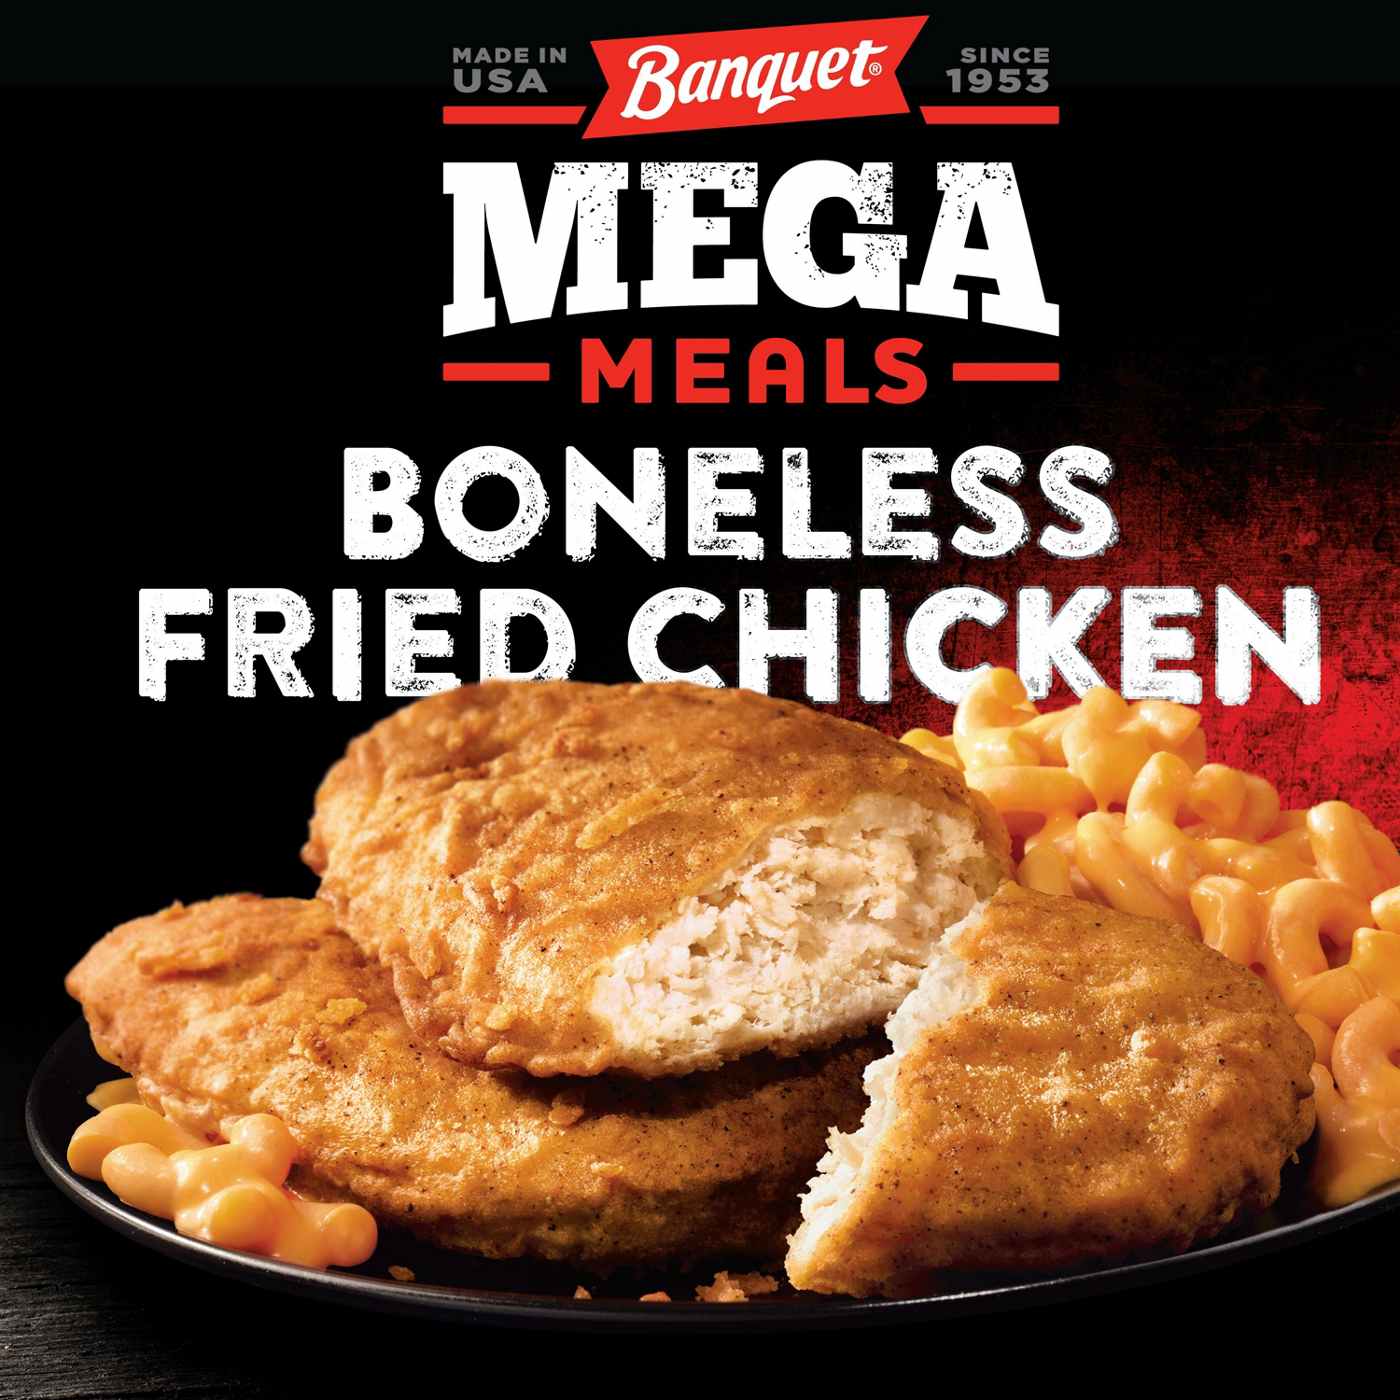 Banquet Mega Meals Boneless Fried Chicken; image 6 of 7